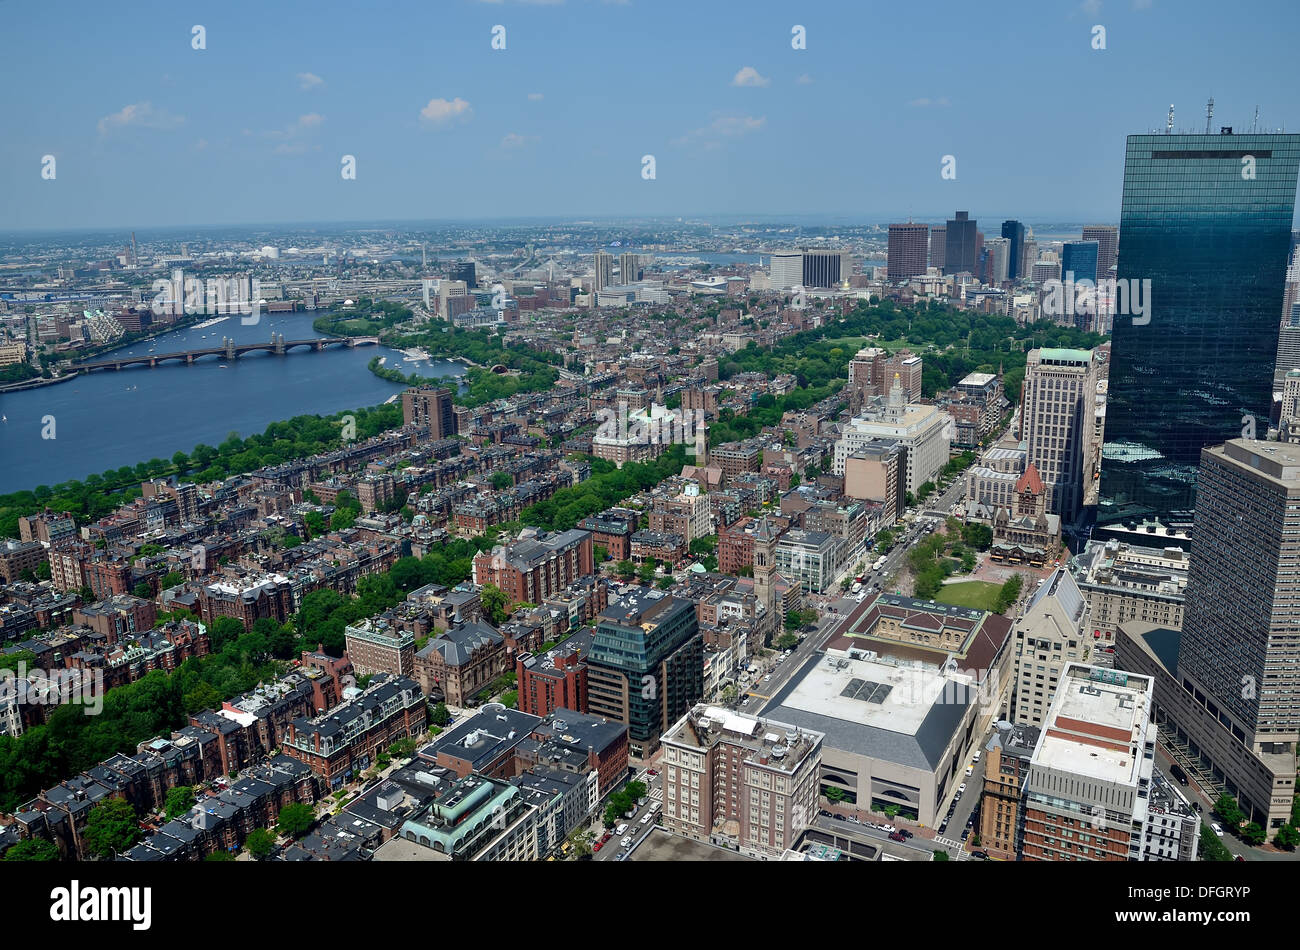 Aeriel view of Boston, Longfellow Bridge and Charles River Stock Photo